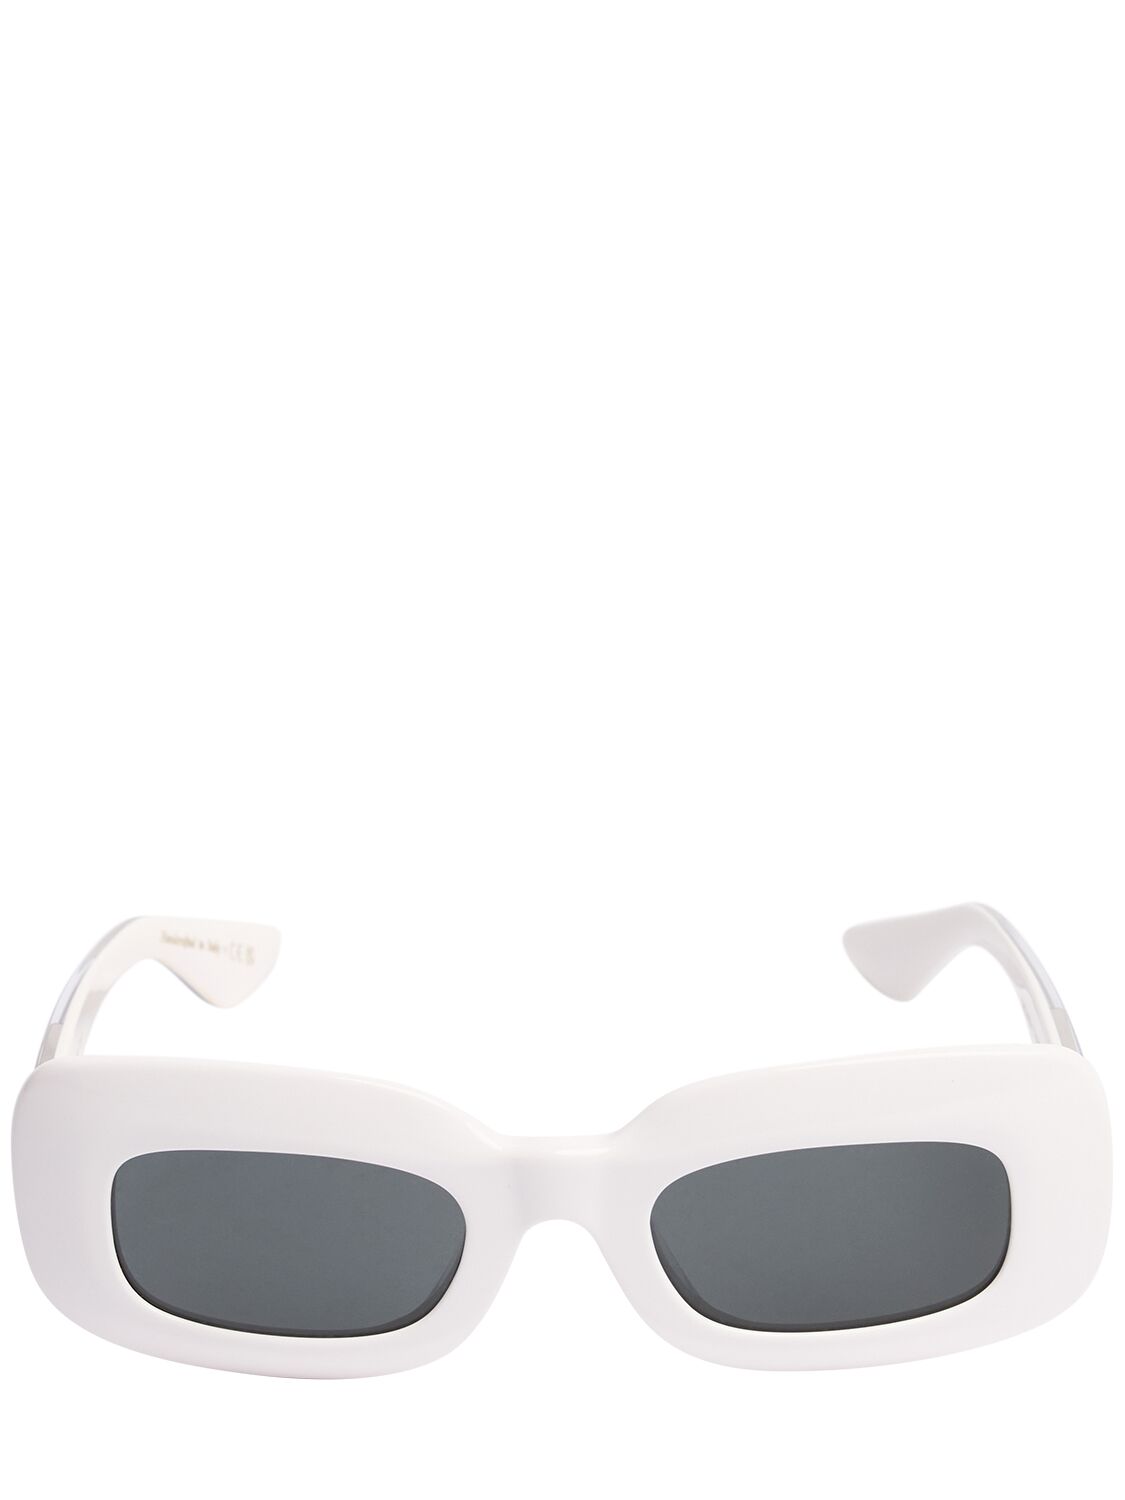 Khaite X Oliver People Square Sunglasses In White